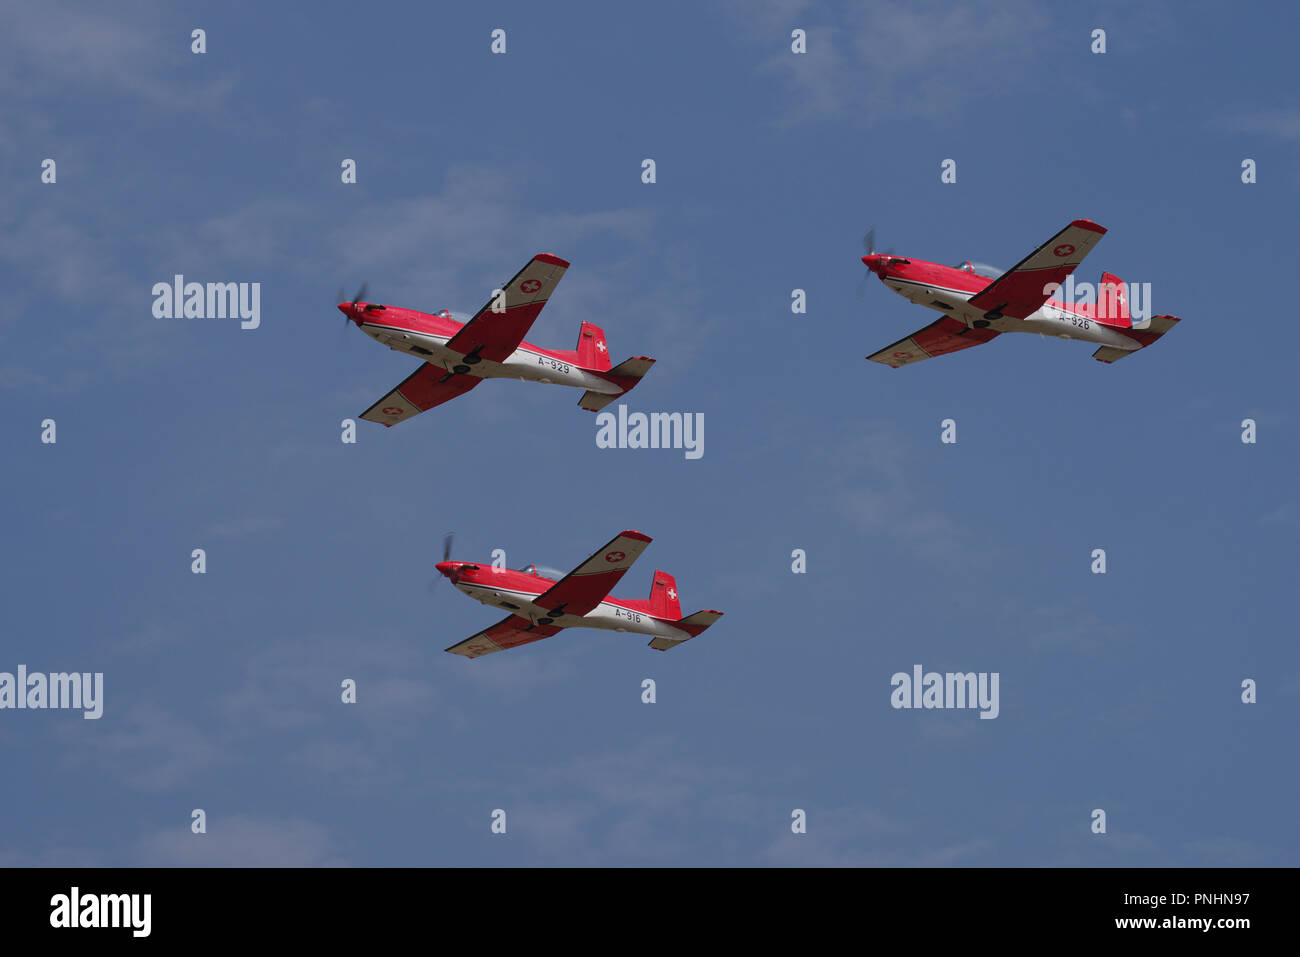 Pilatus PC-7 Team Swiss Air Force Stockfotografie - Alamy